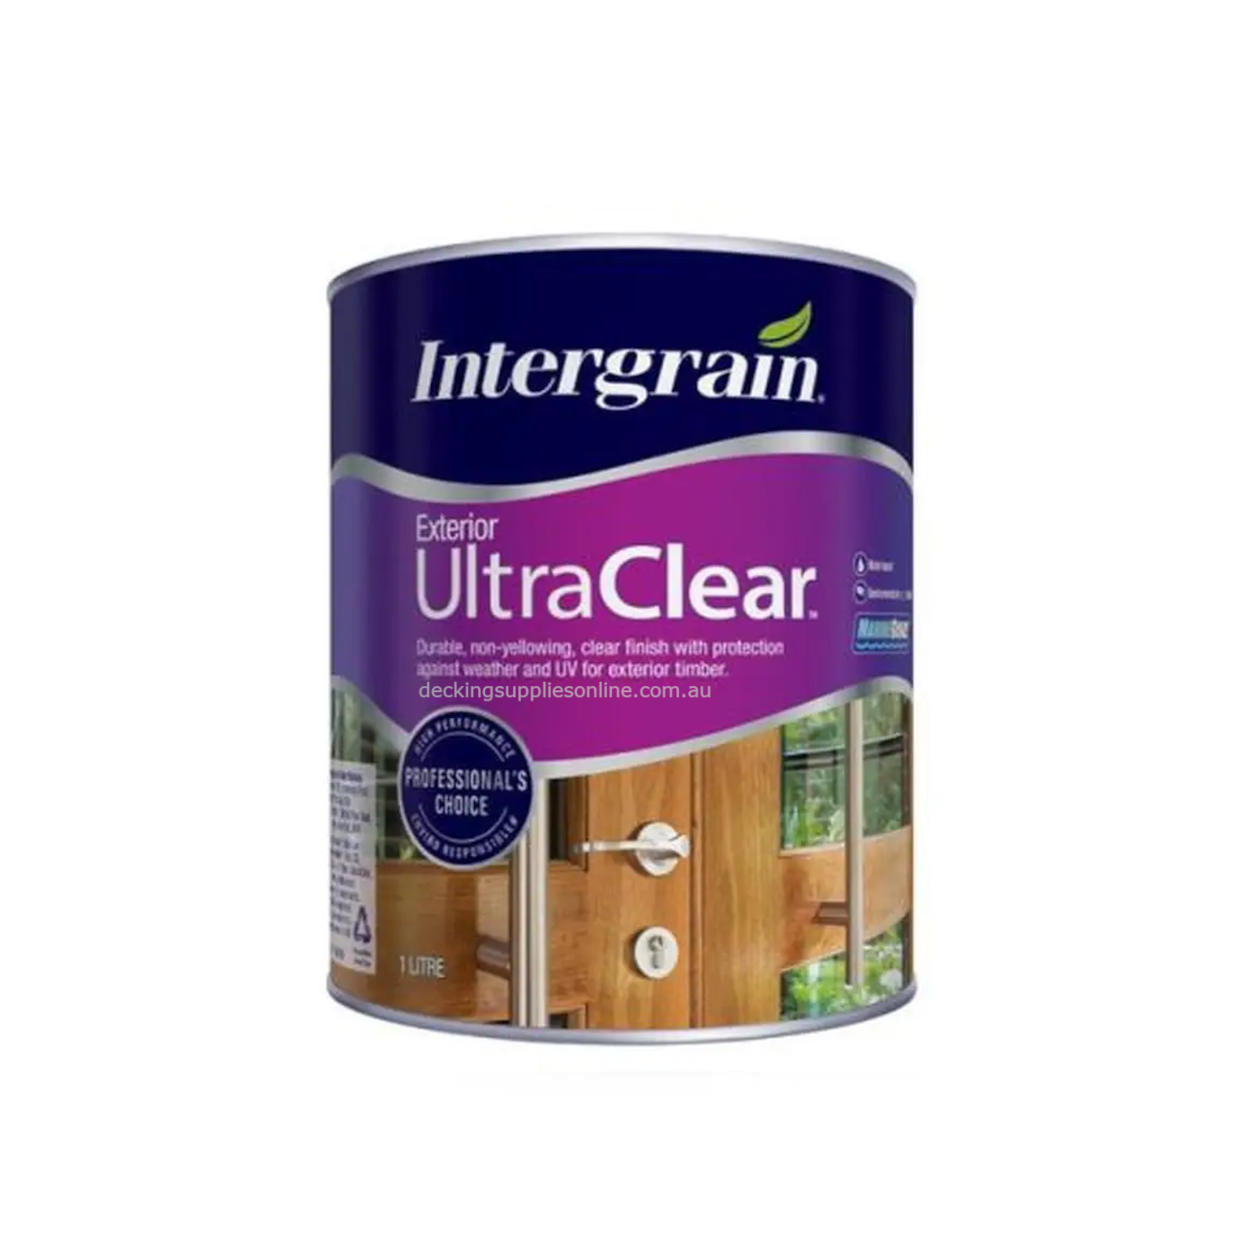 Intergrain_UltraClear_1_Litre_Decking_Supplies_Online